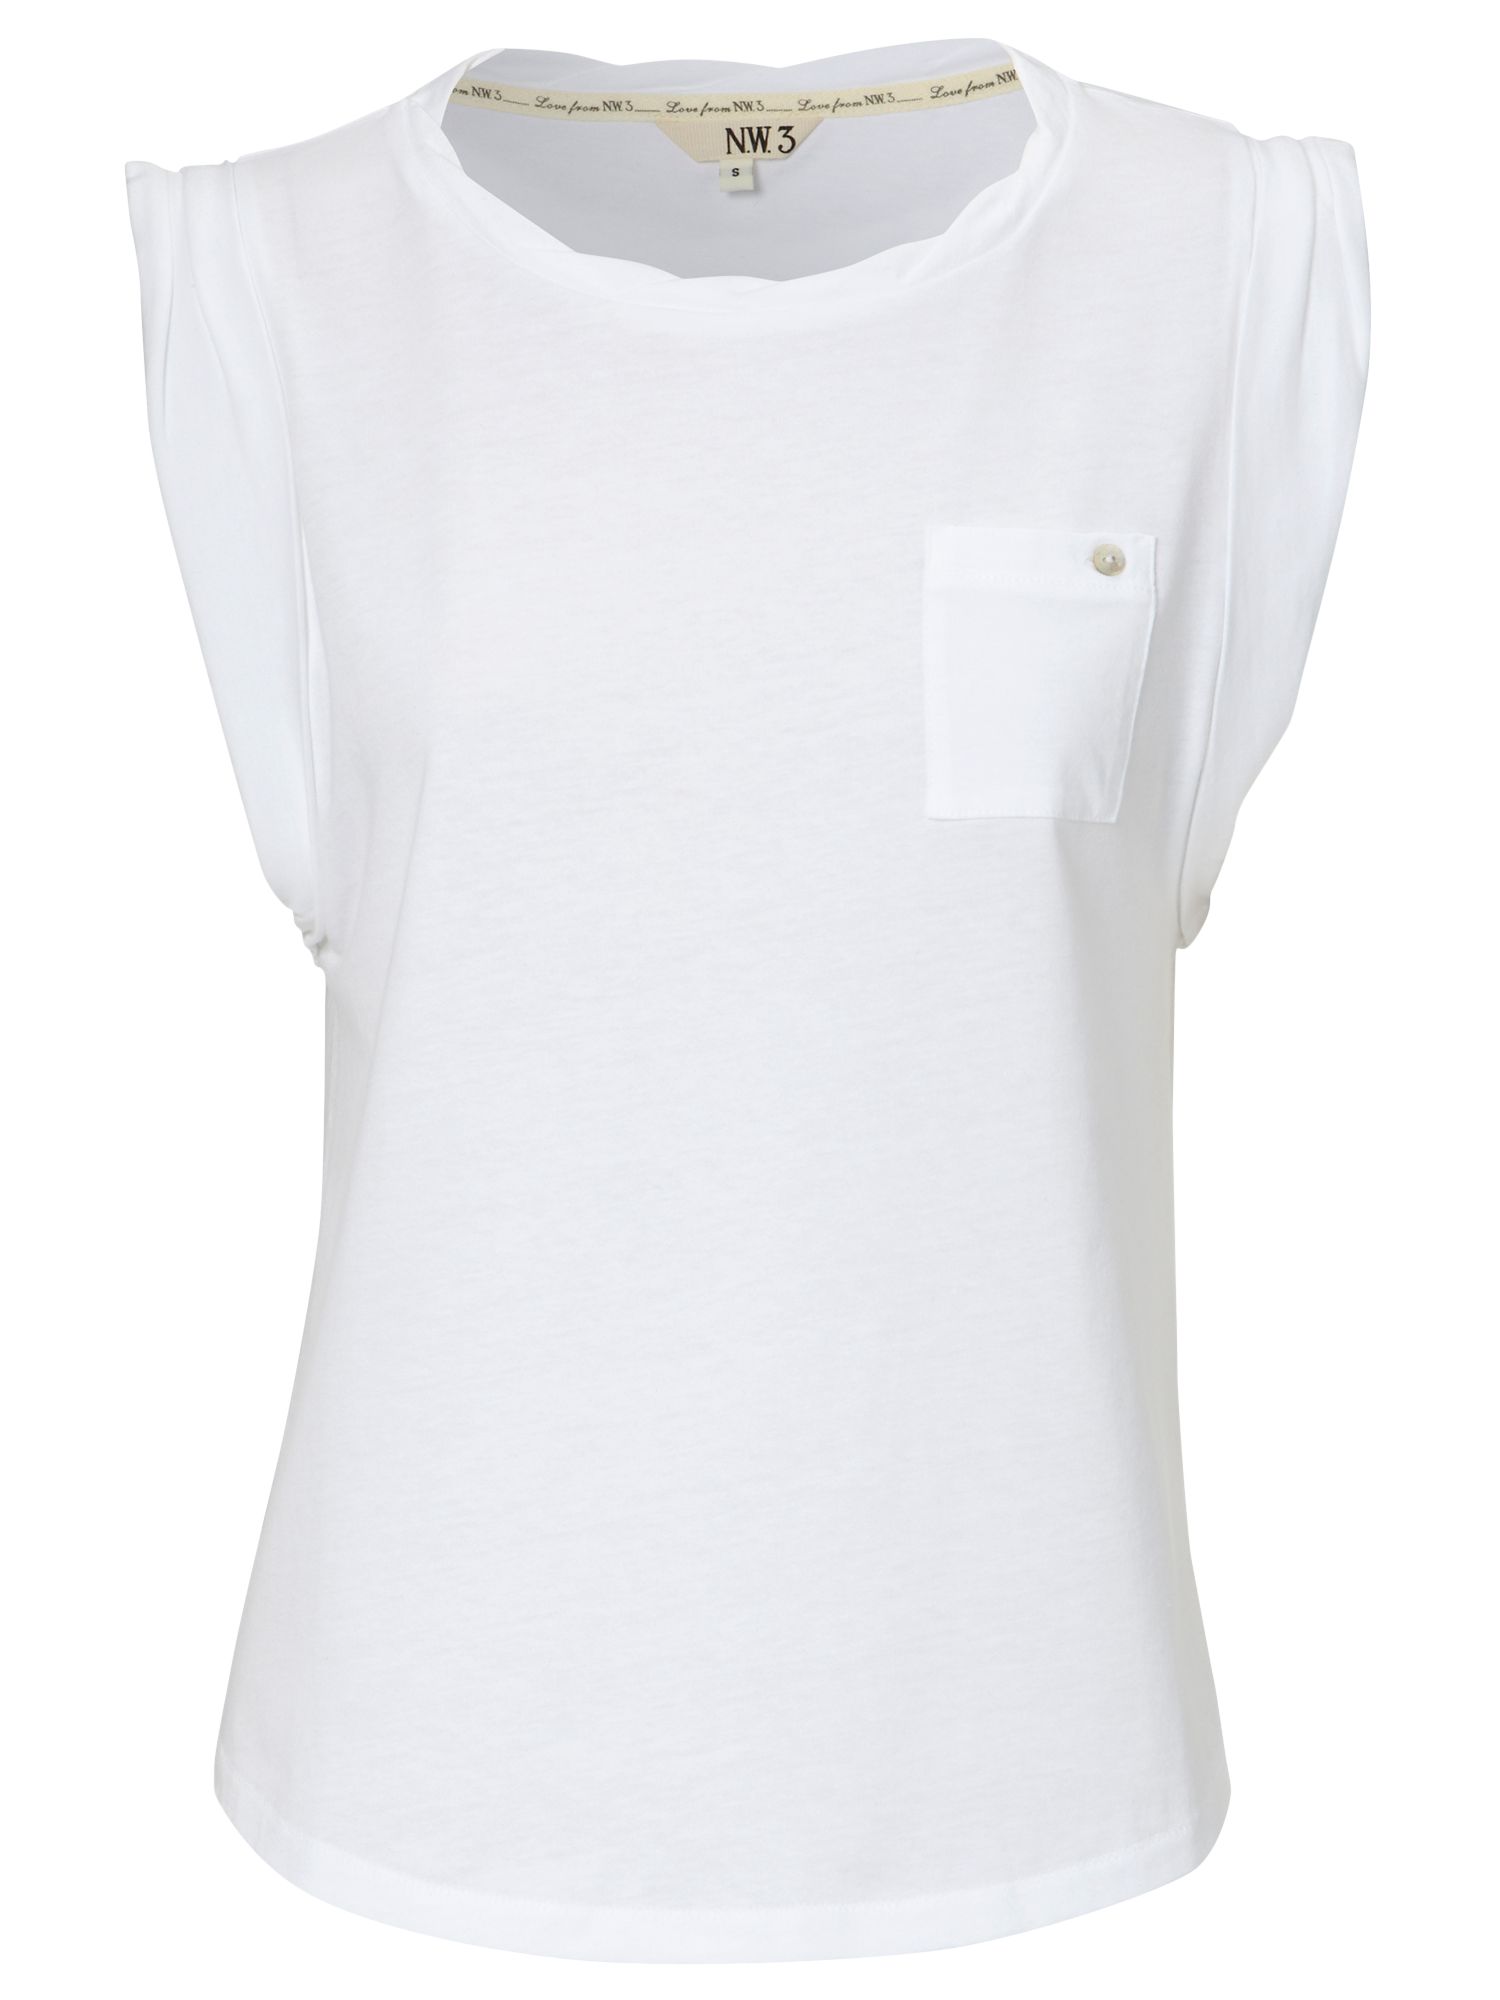 NW3 Highgate T-Shirt, White